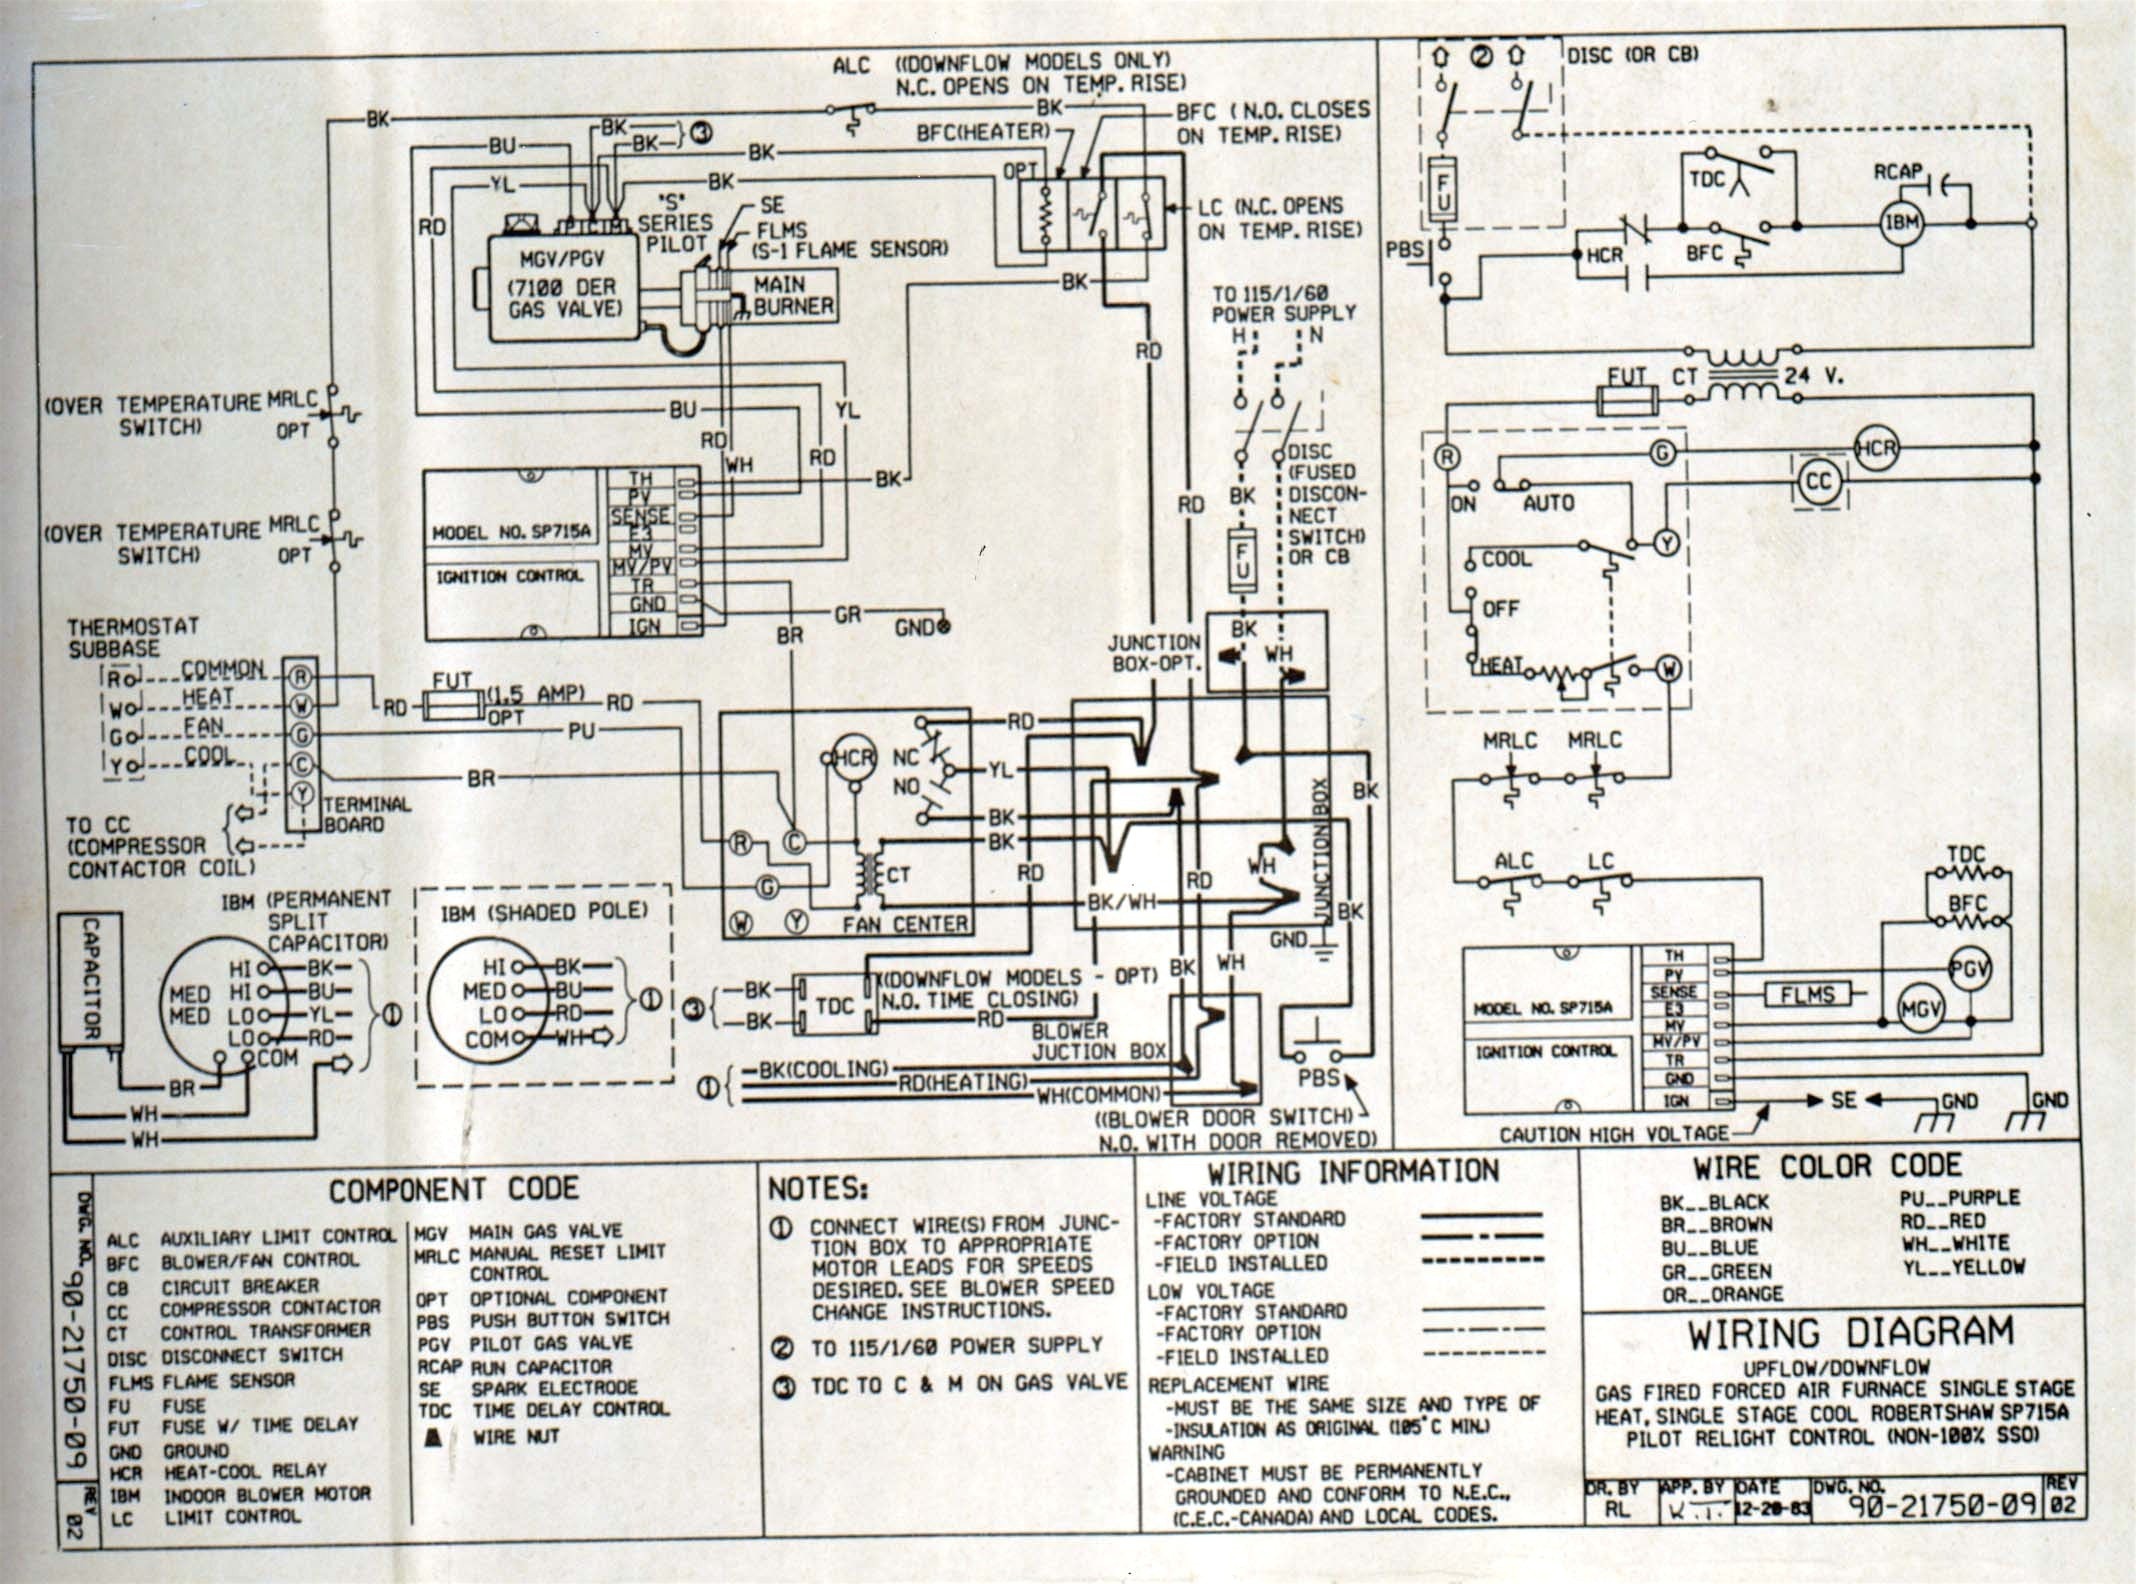 goodman gas pack wiring diagram example electrical wiring diagram u2022 rh cranejapan co Goodman Furnace Wiring Diagram Goodman Furnace Wiring Diagram